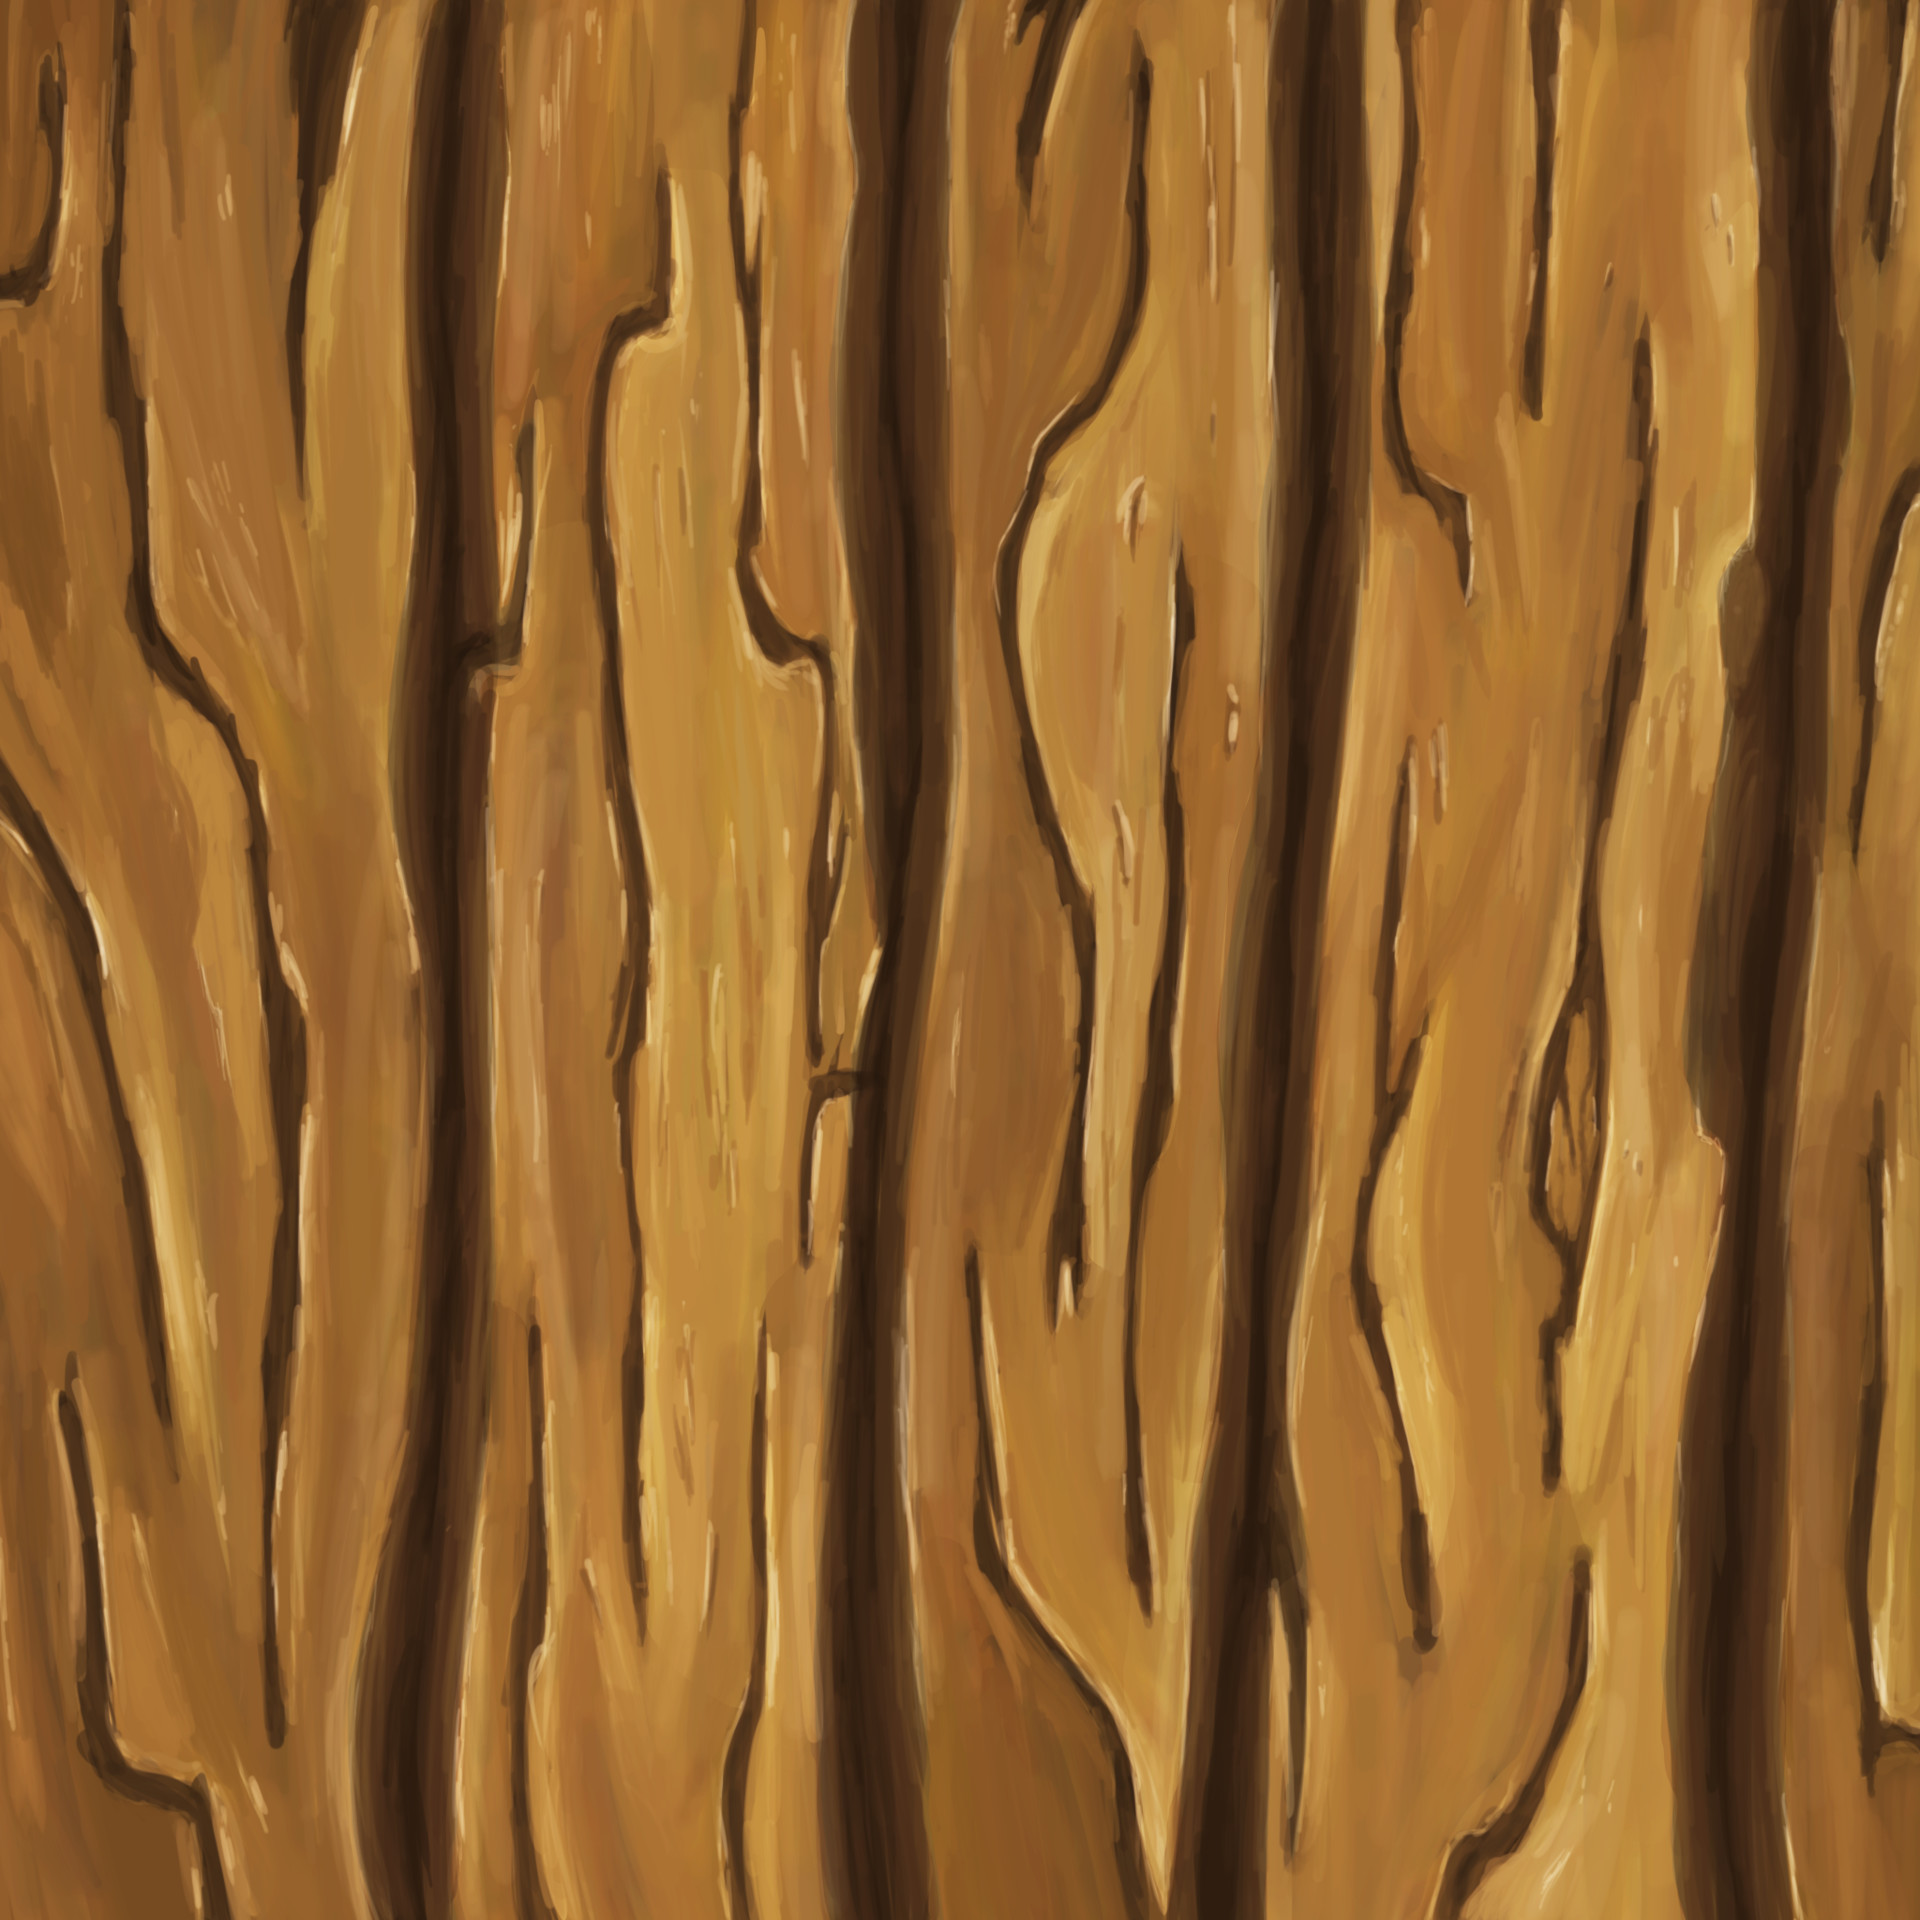 hand drawn wood grain pattern